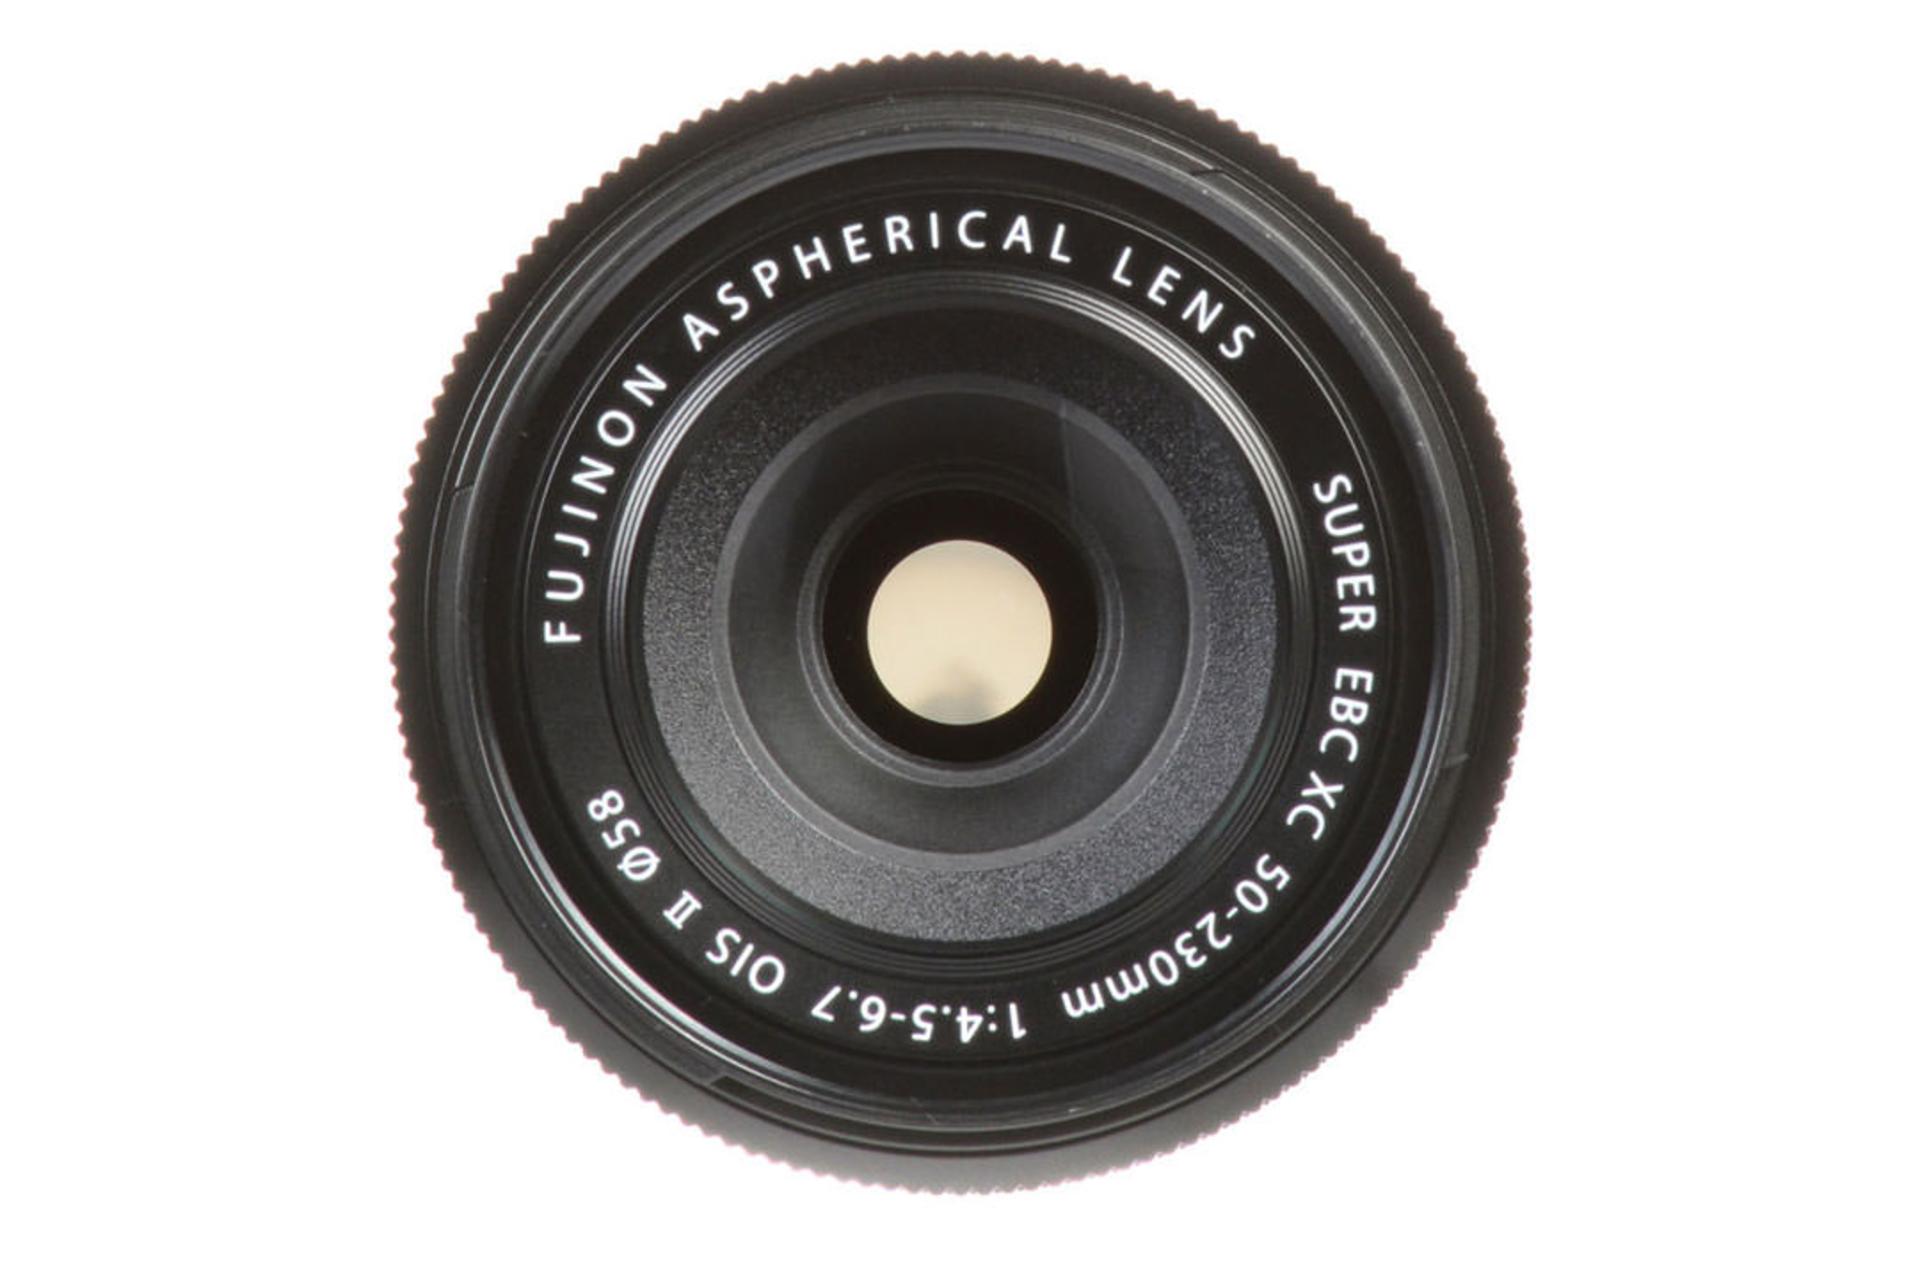 Fujifilm XC 50-230mm F4.5-6.7 OIS	